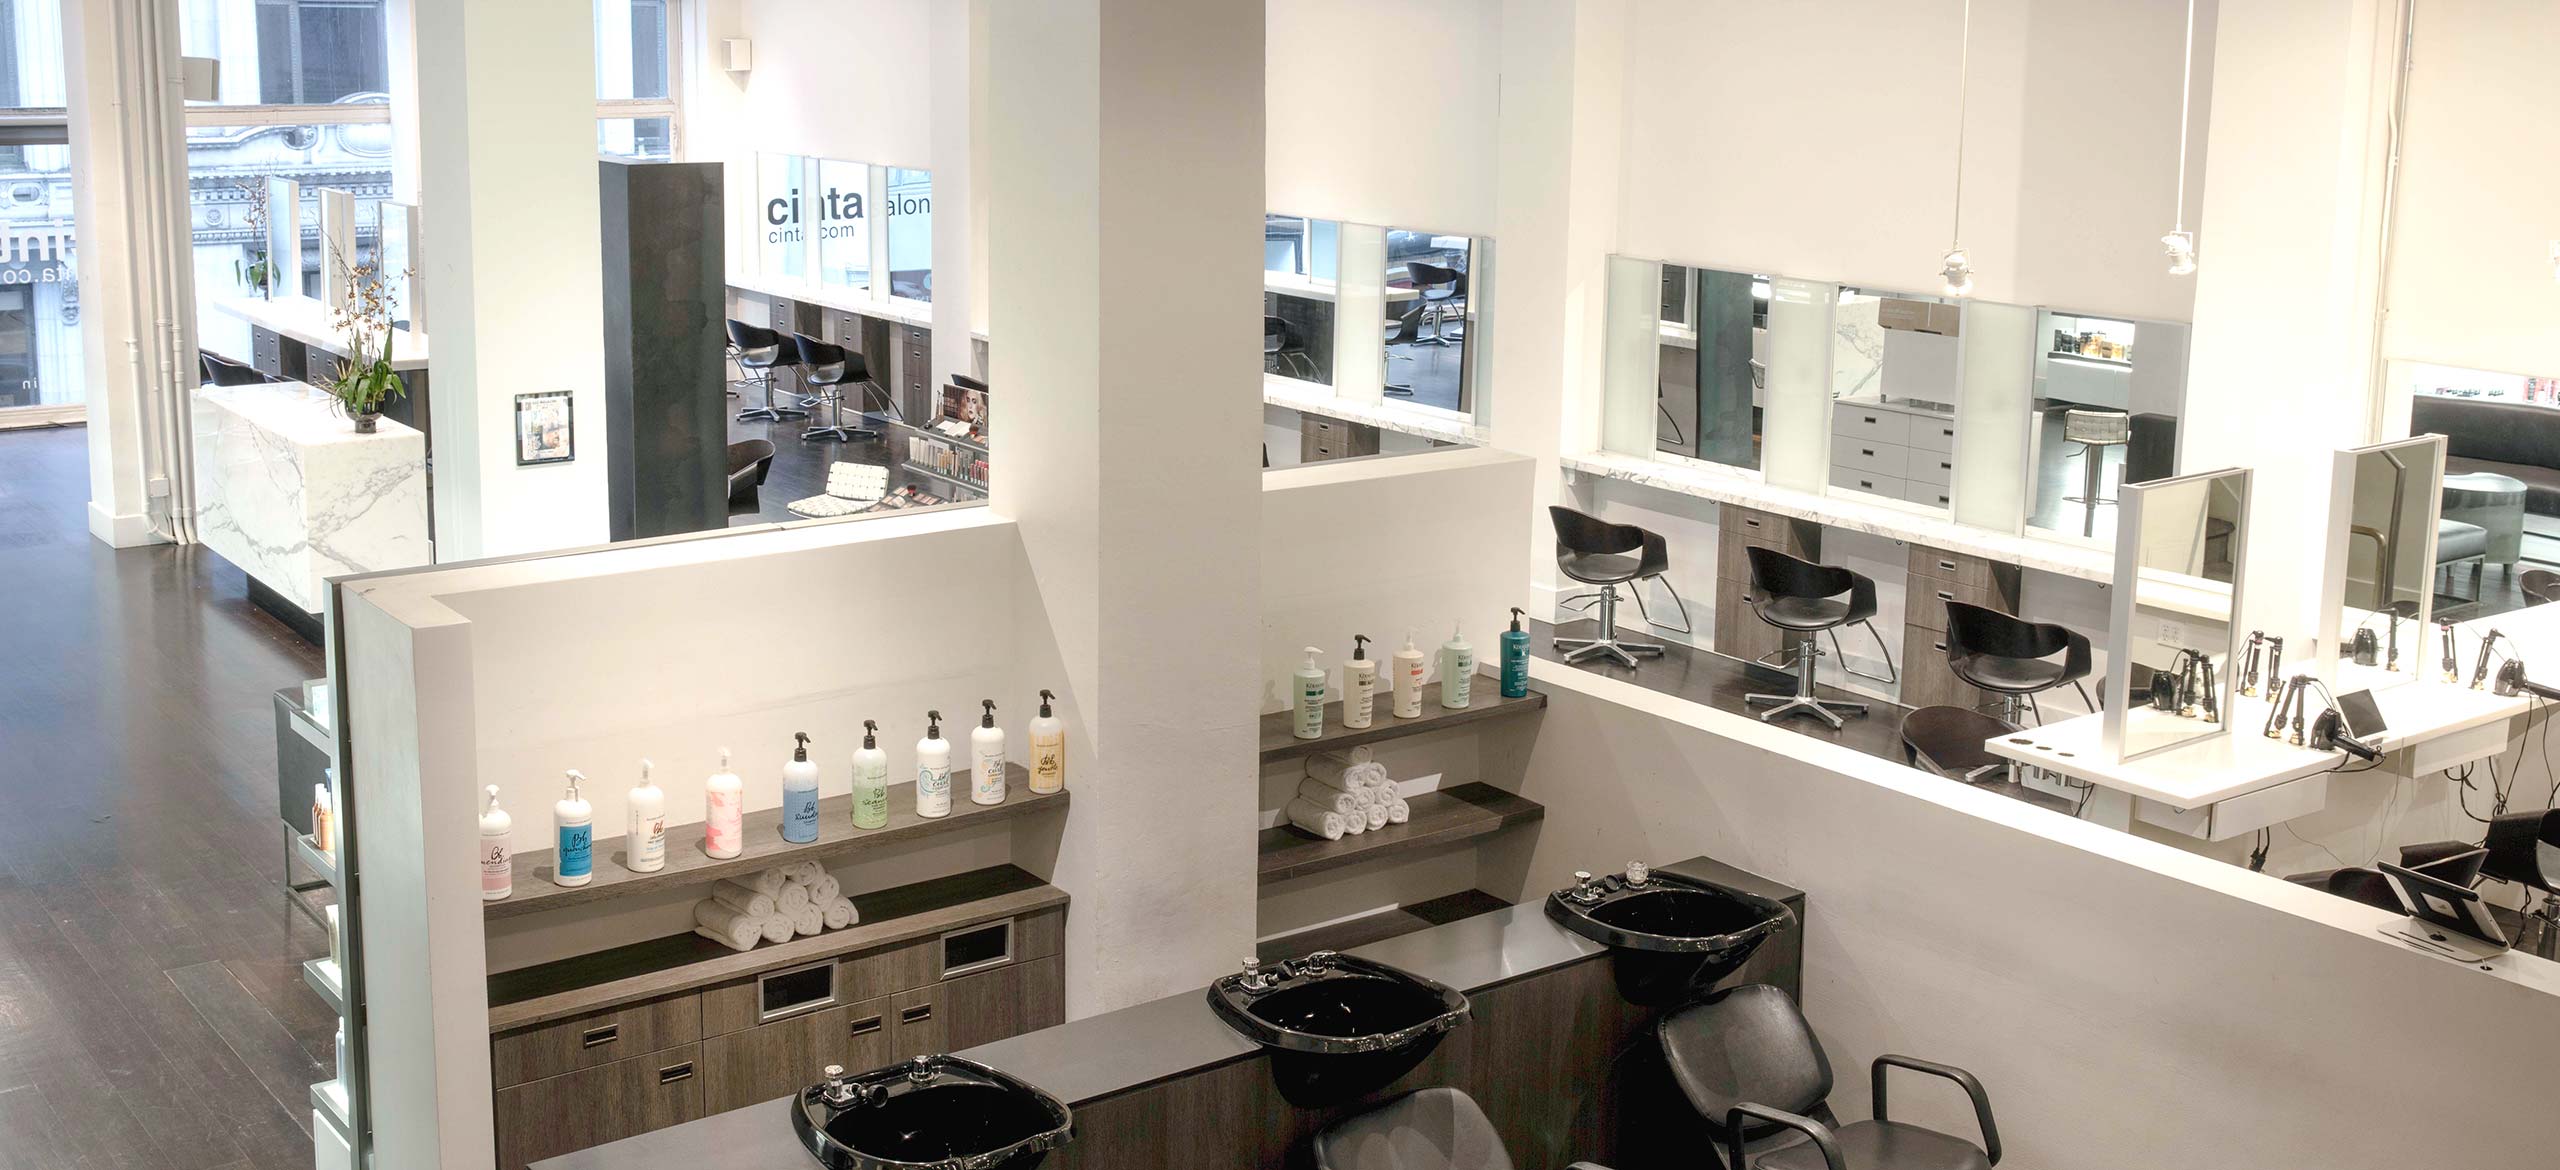 Cinta Salon - Shampoo Stations and the Salon - high view